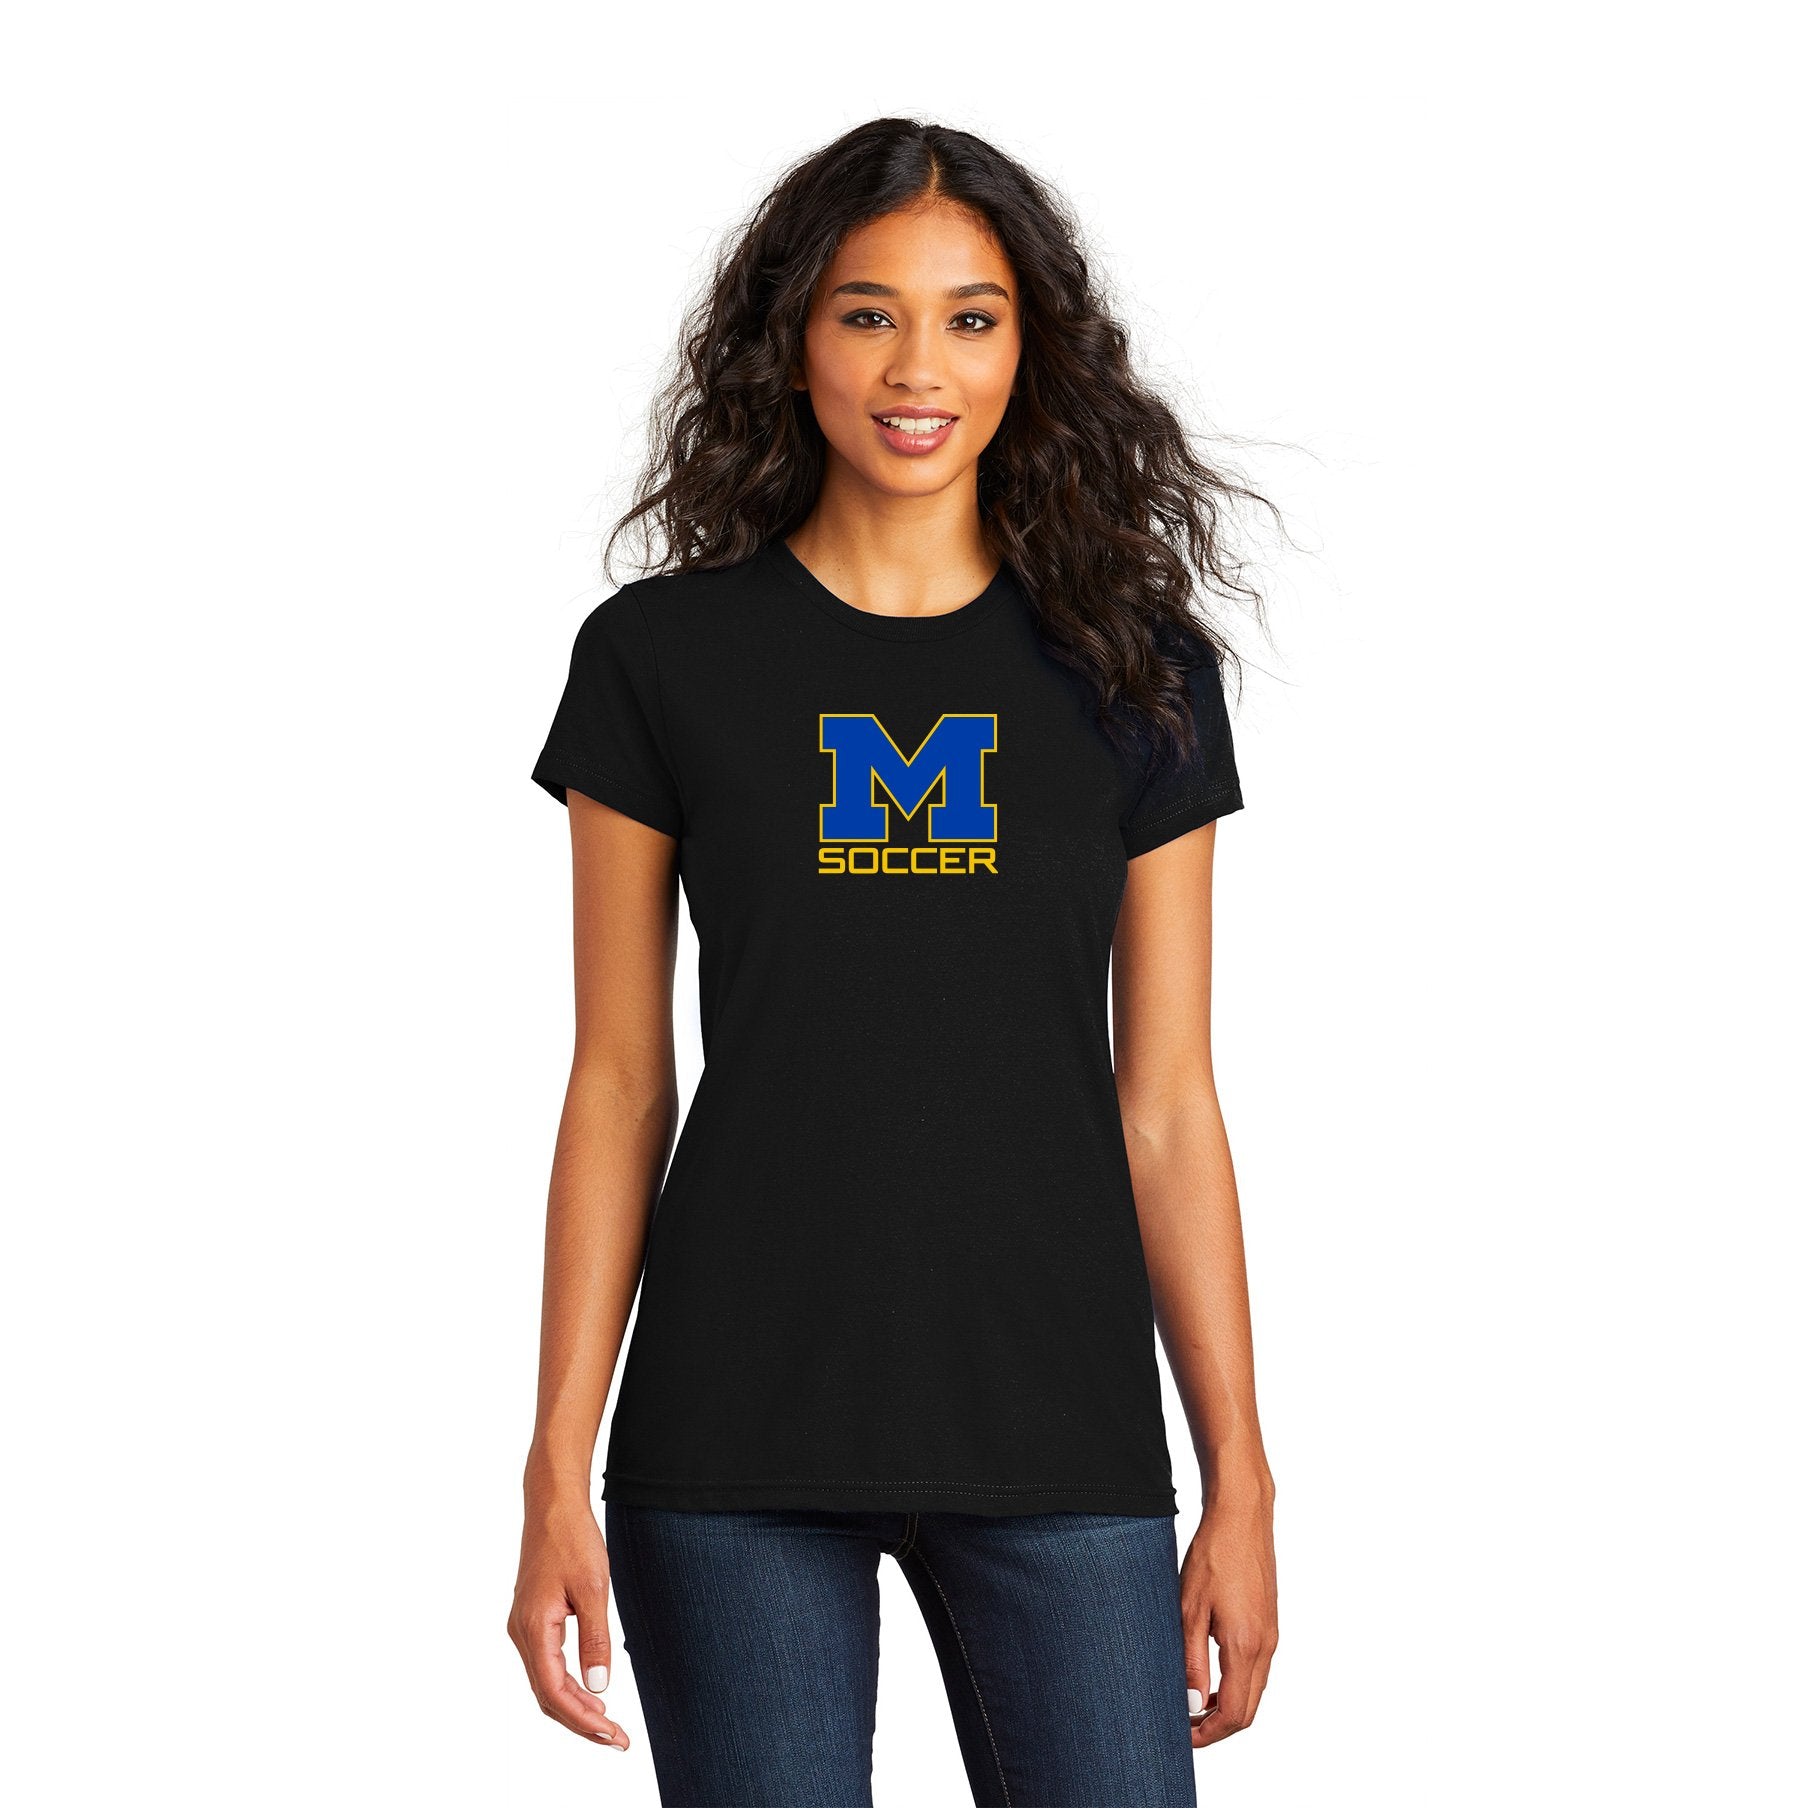 Mira Mesa Soccer Women's Tee - Black